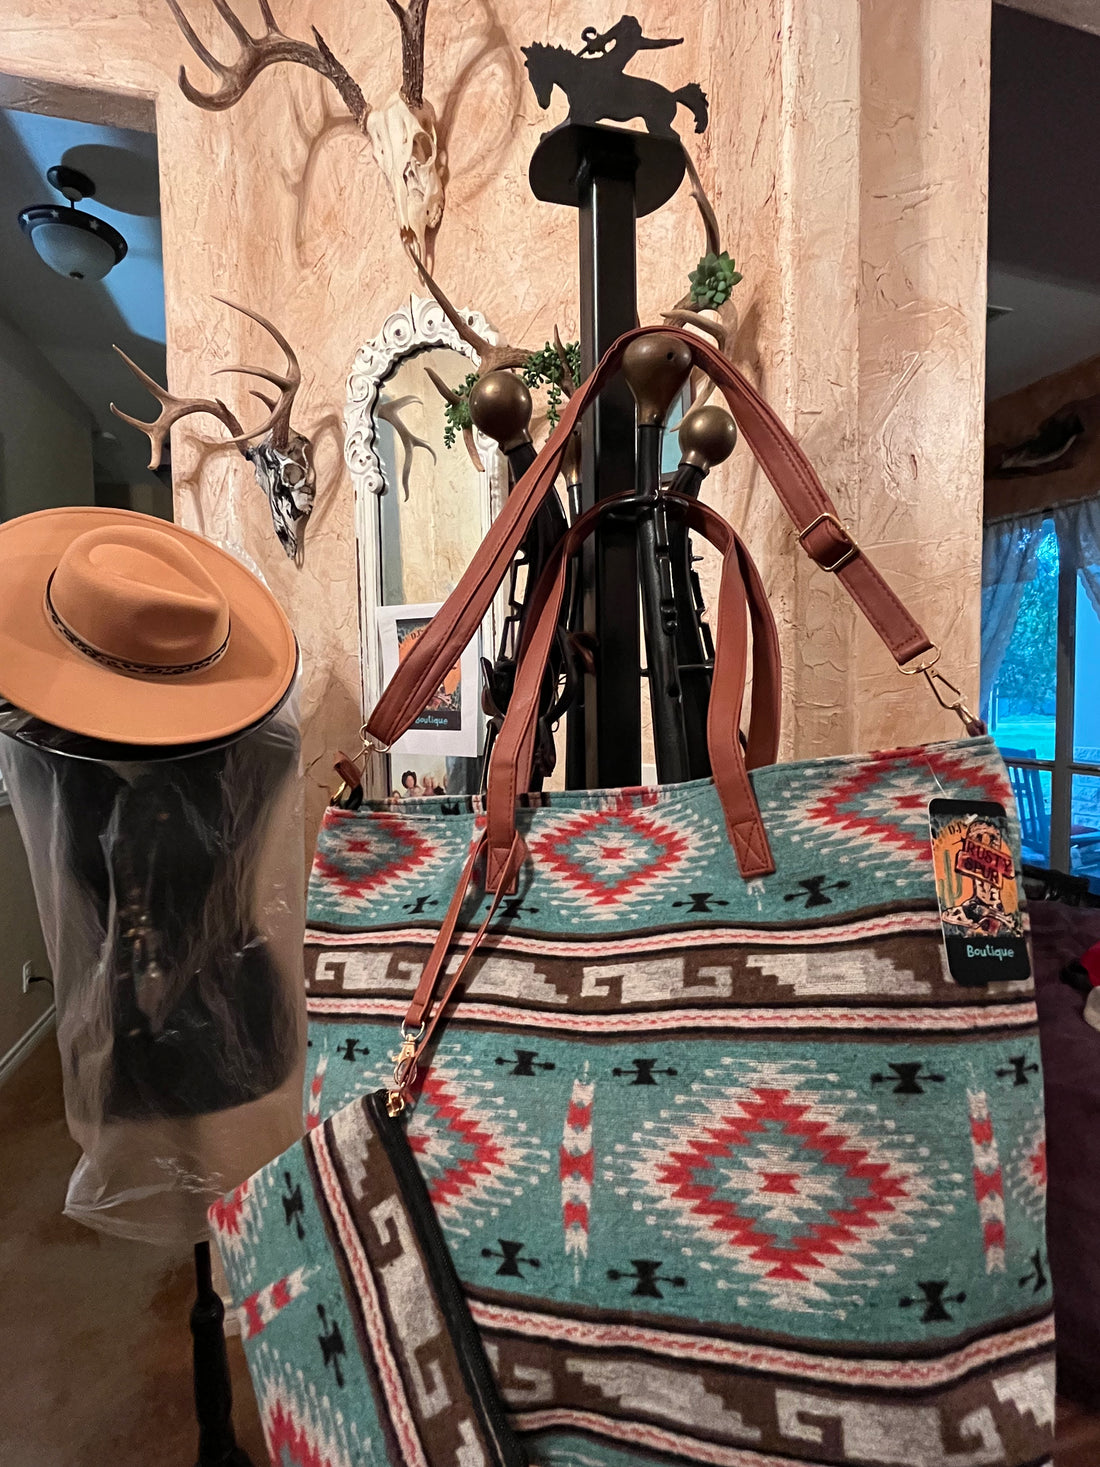 Aztec Tapestry Tote Shoulder Handbag with Small Wallet